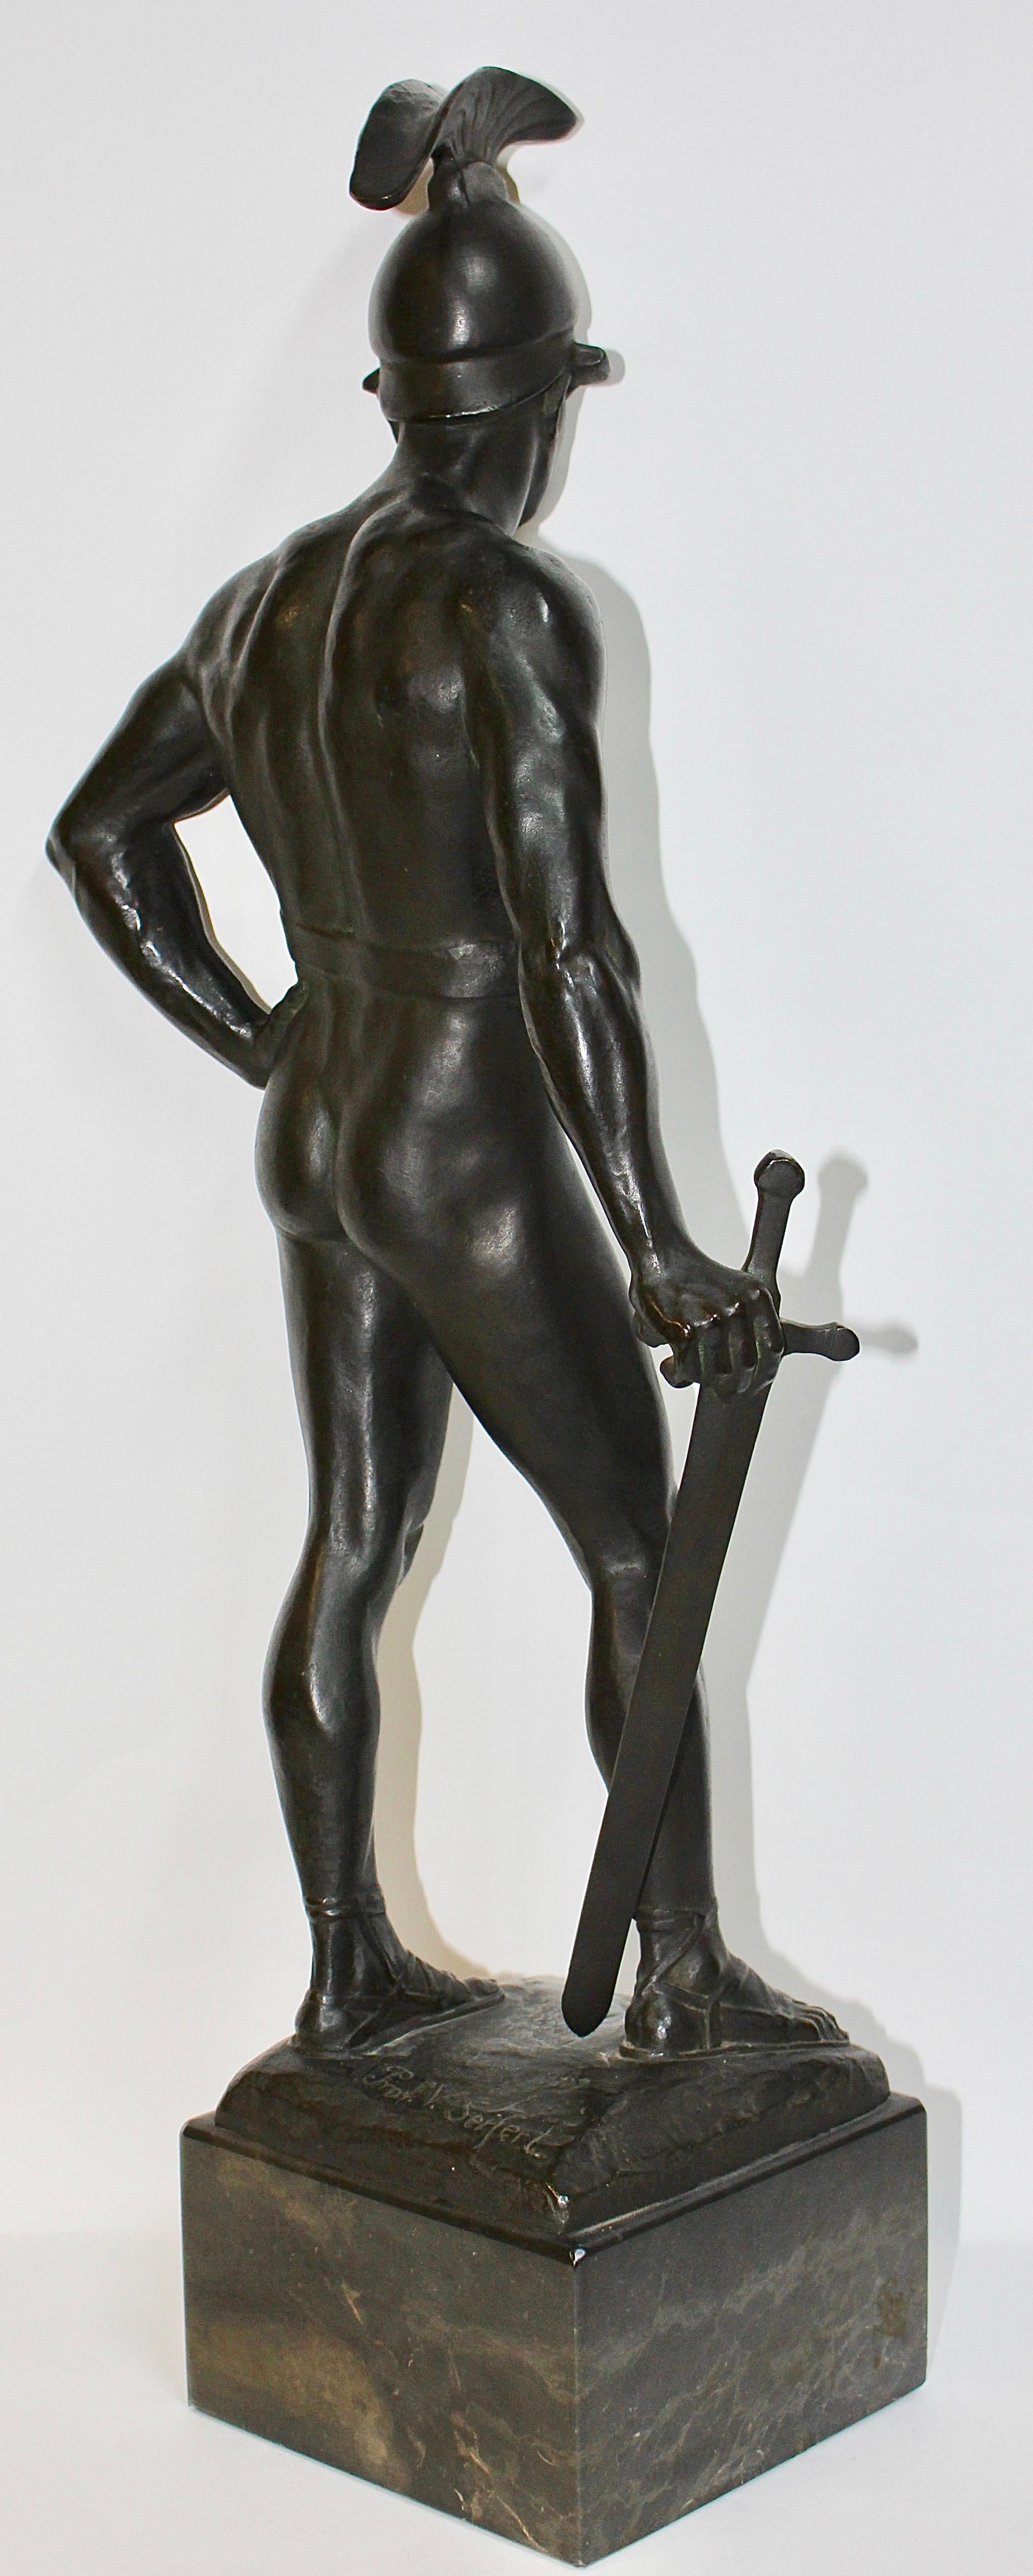 spartan sculptures